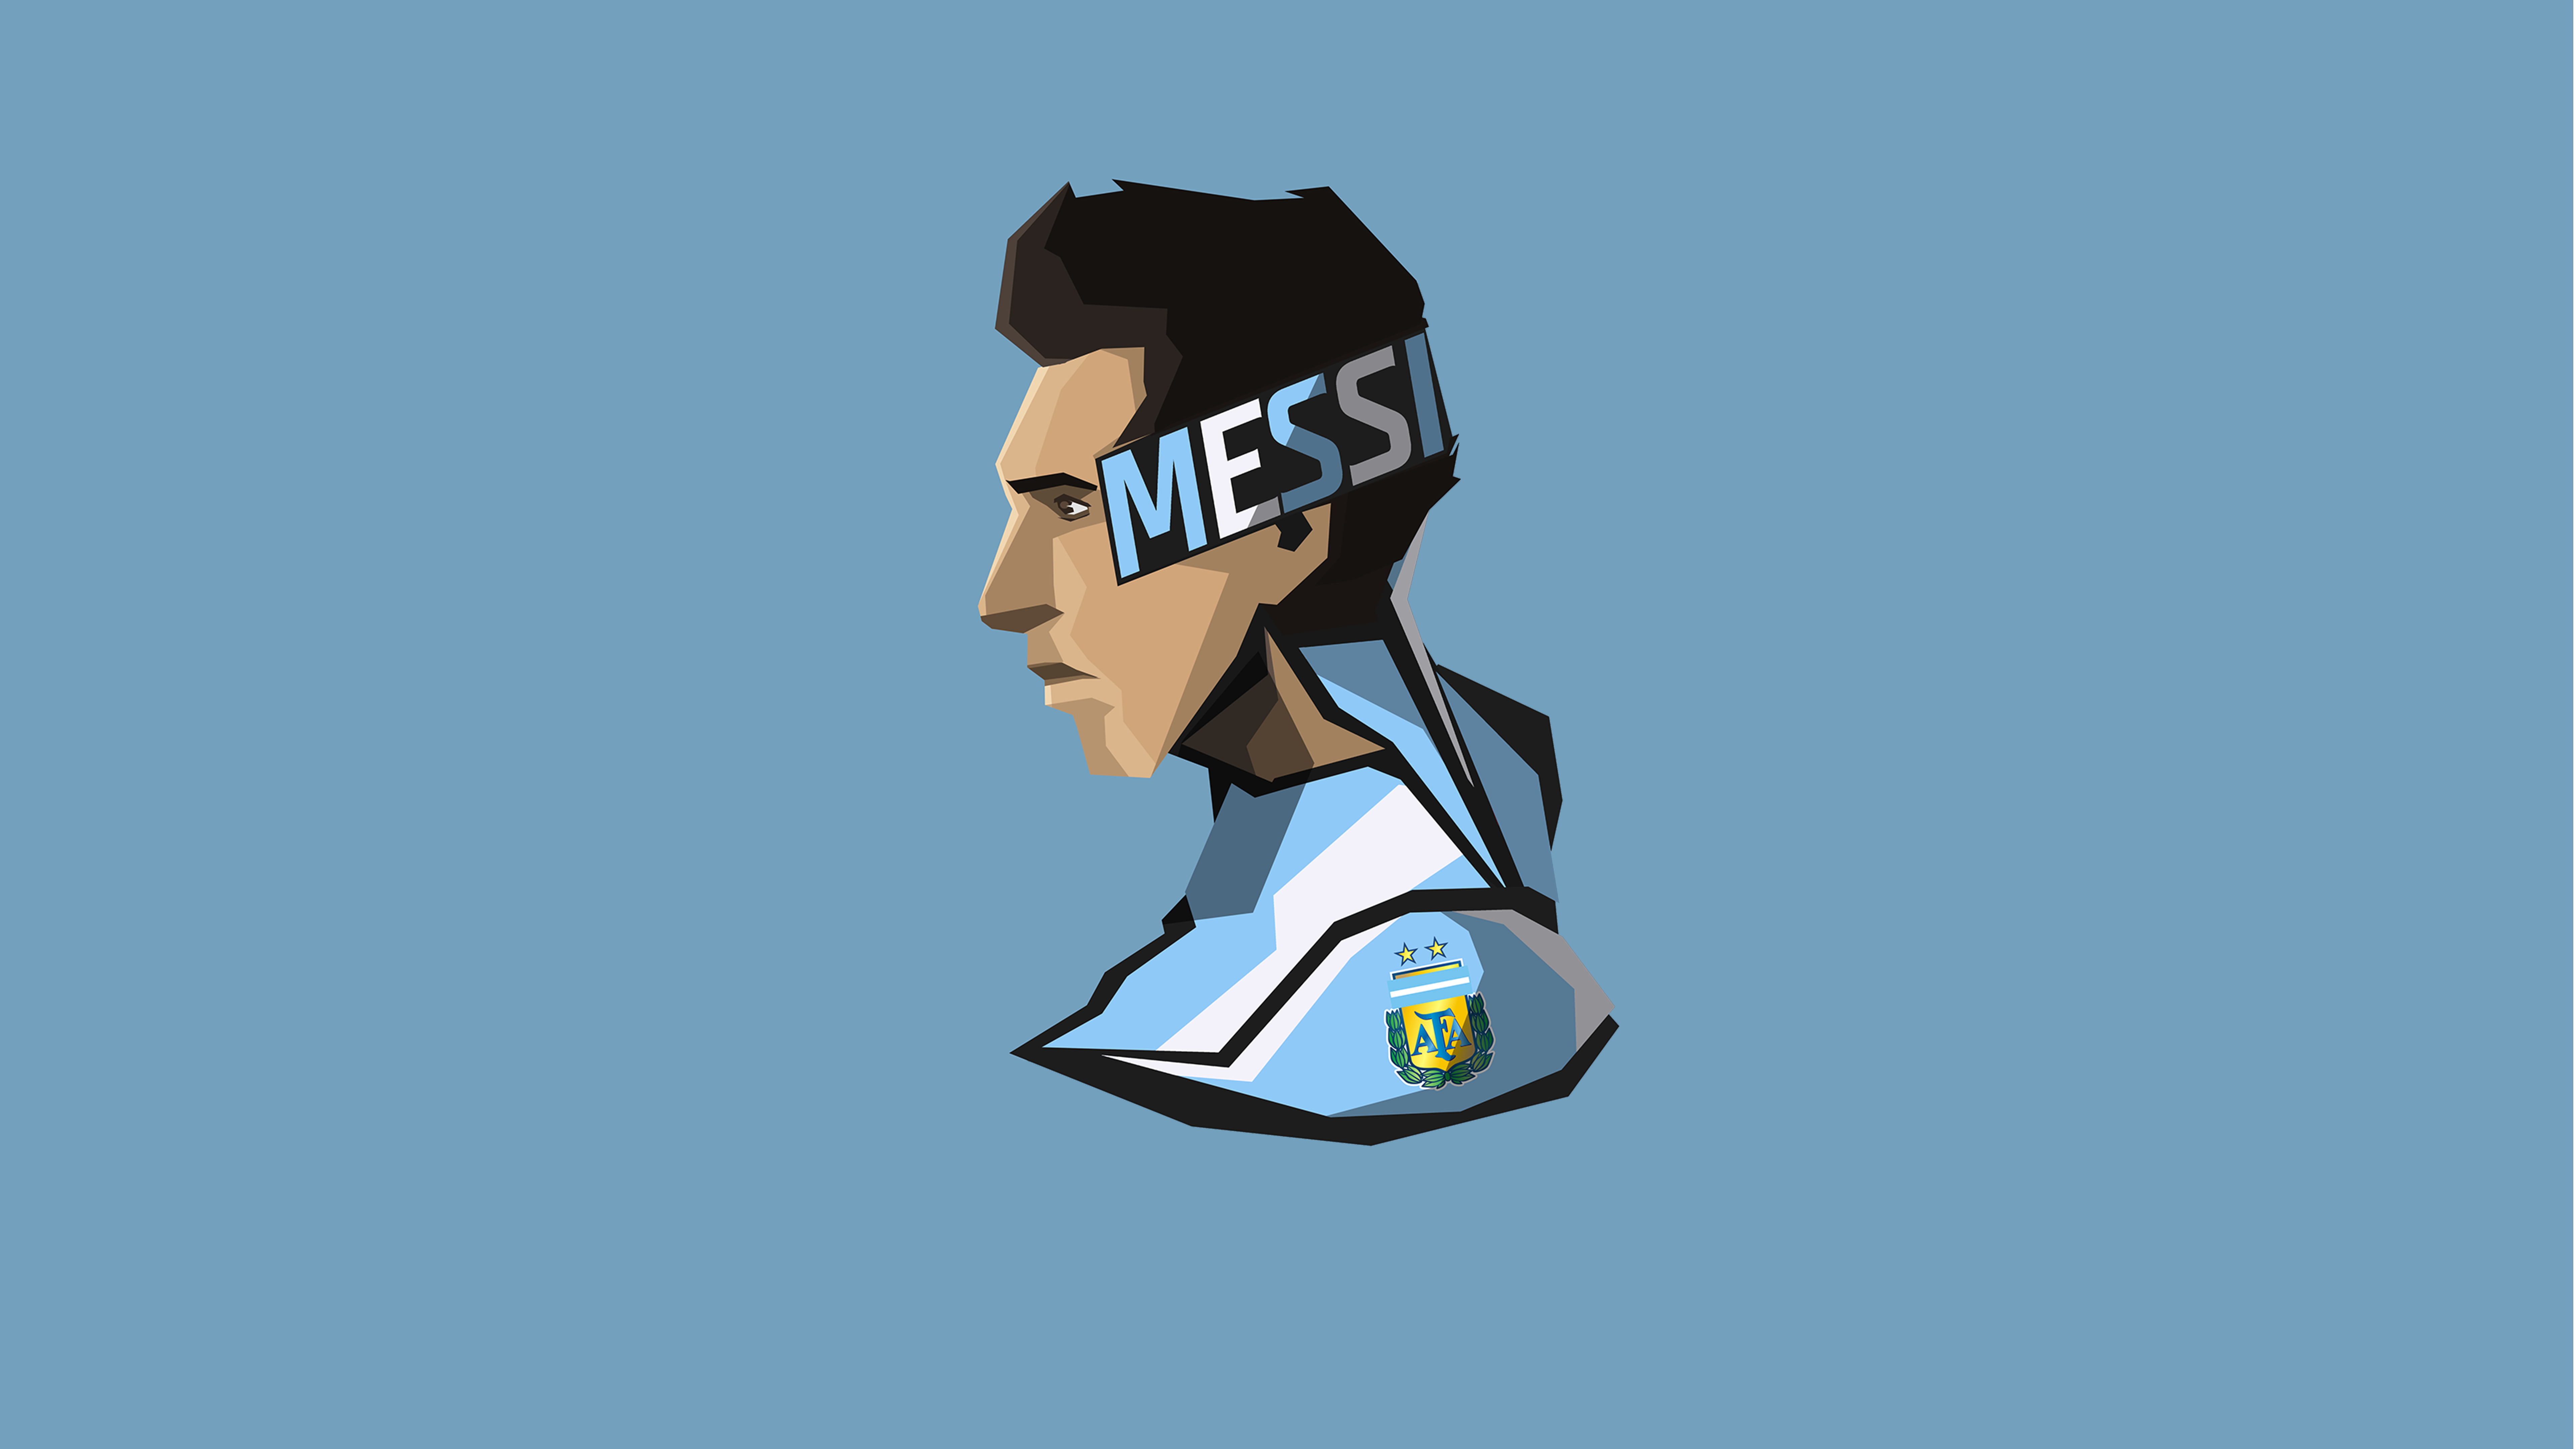 7680x4320 Lionel Messi wallpaper for desktop. Lionel Messi